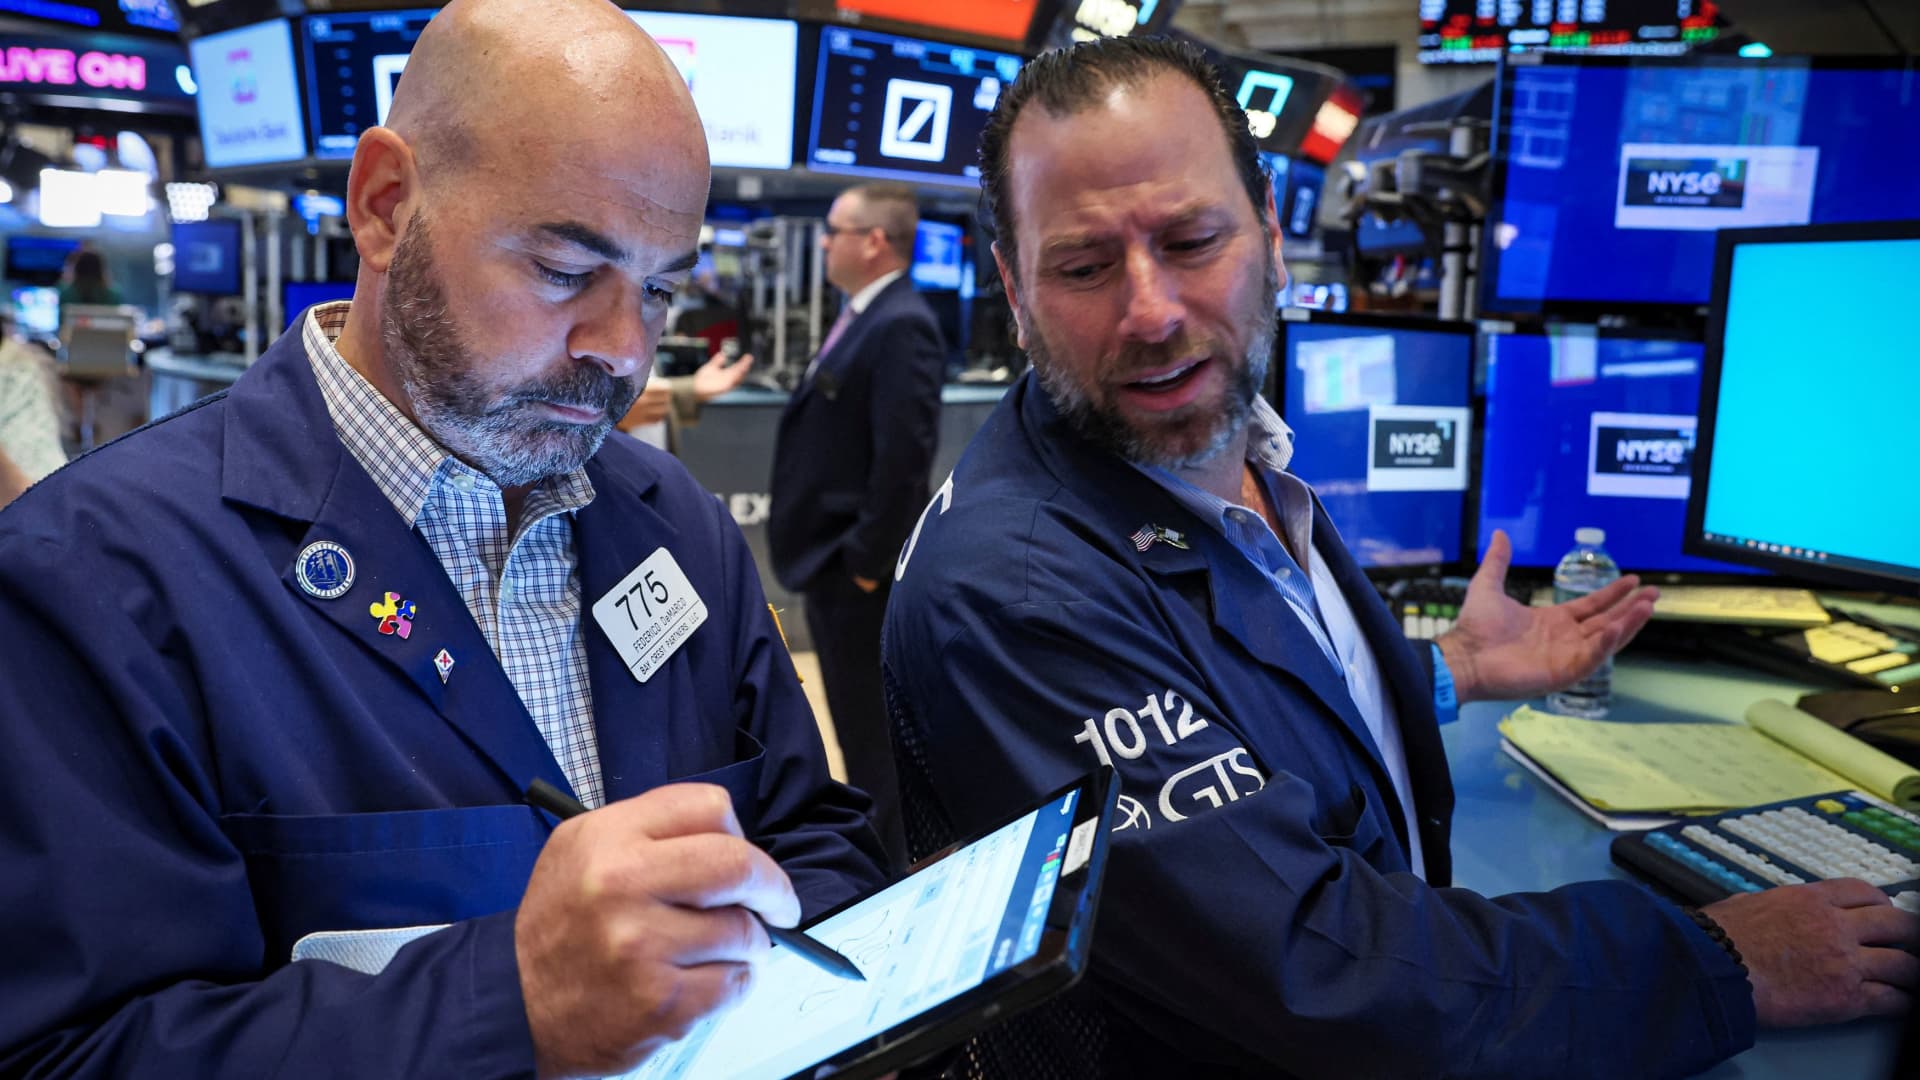 Stock futures rise as Wall Street awaits more major bank earnings